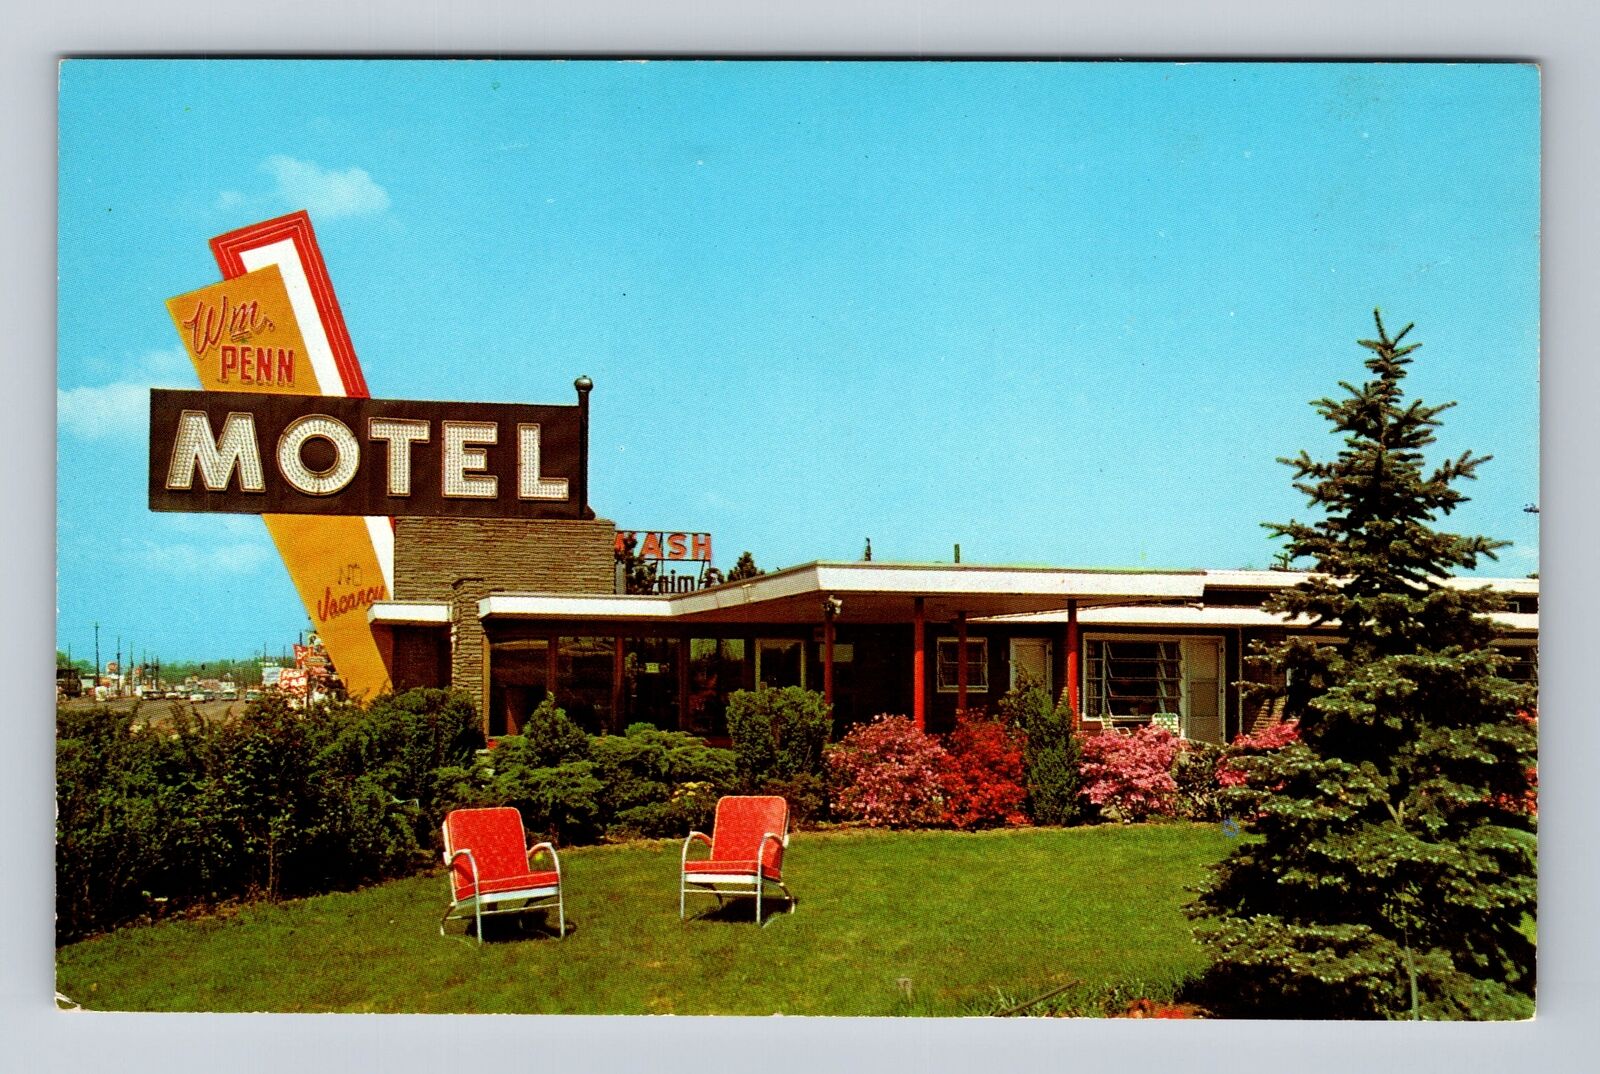 Monroeville PA-Pennsylvania, WM Penn Motel, Advertisement, Vintage Postcard